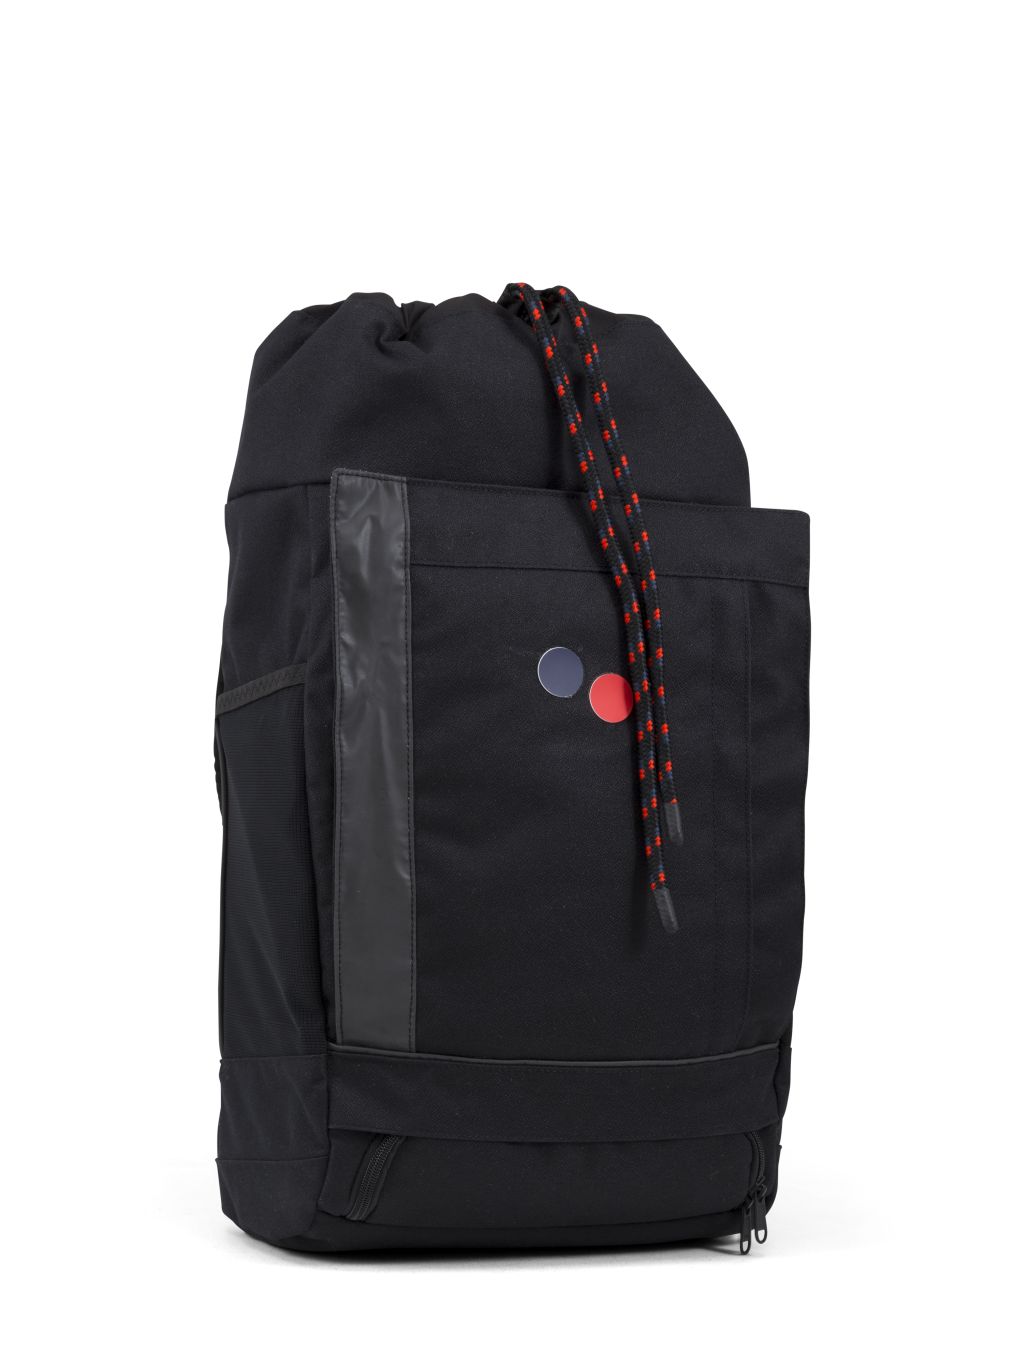 Blok Medium Backpack Licorice Black